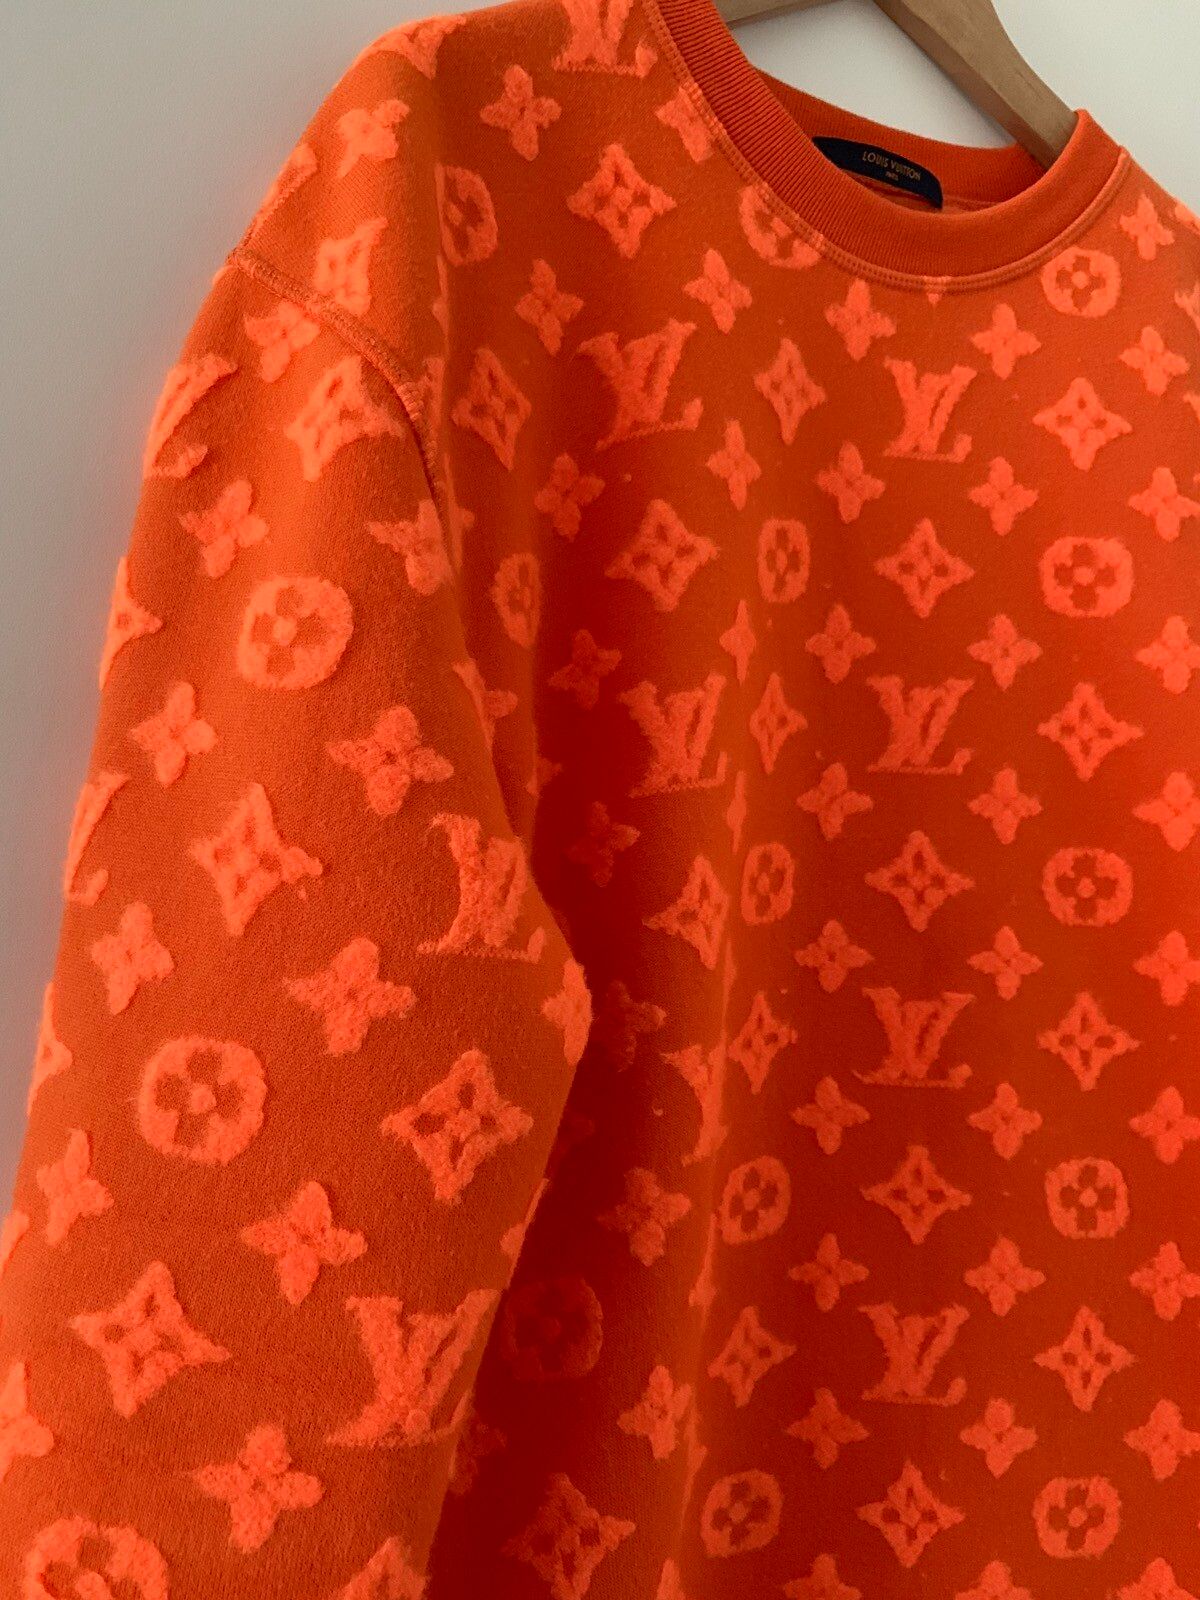 Louis Vuitton LV Orange Monogram Sweater Pre Fall 19 Size US M / EU 48-50 / 2 - 6 Preview